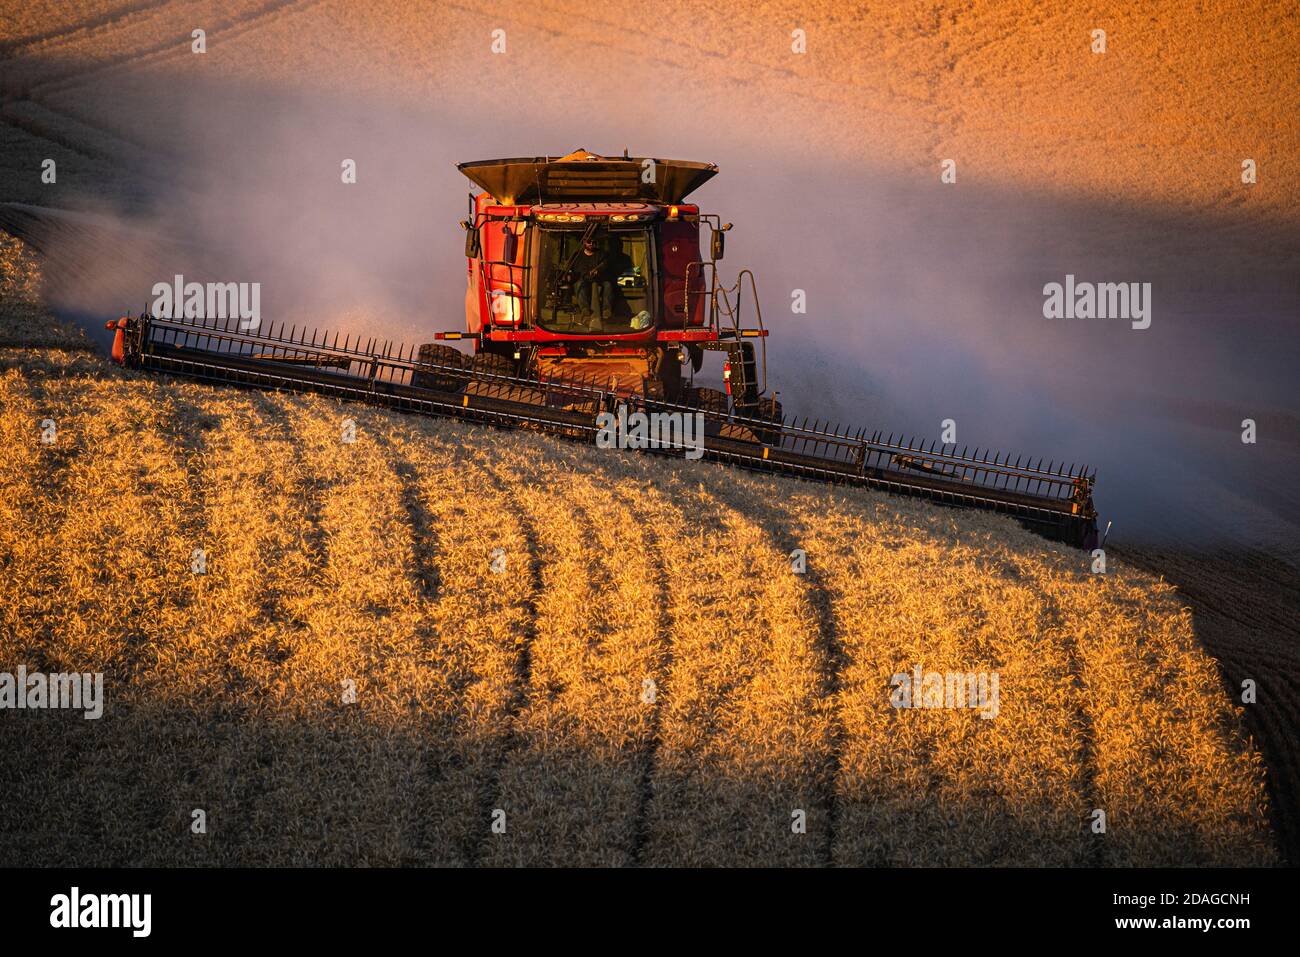 CaseIH combine harvests wheat on the hills of the Palouse Region of Eastern Washington Stock Photo